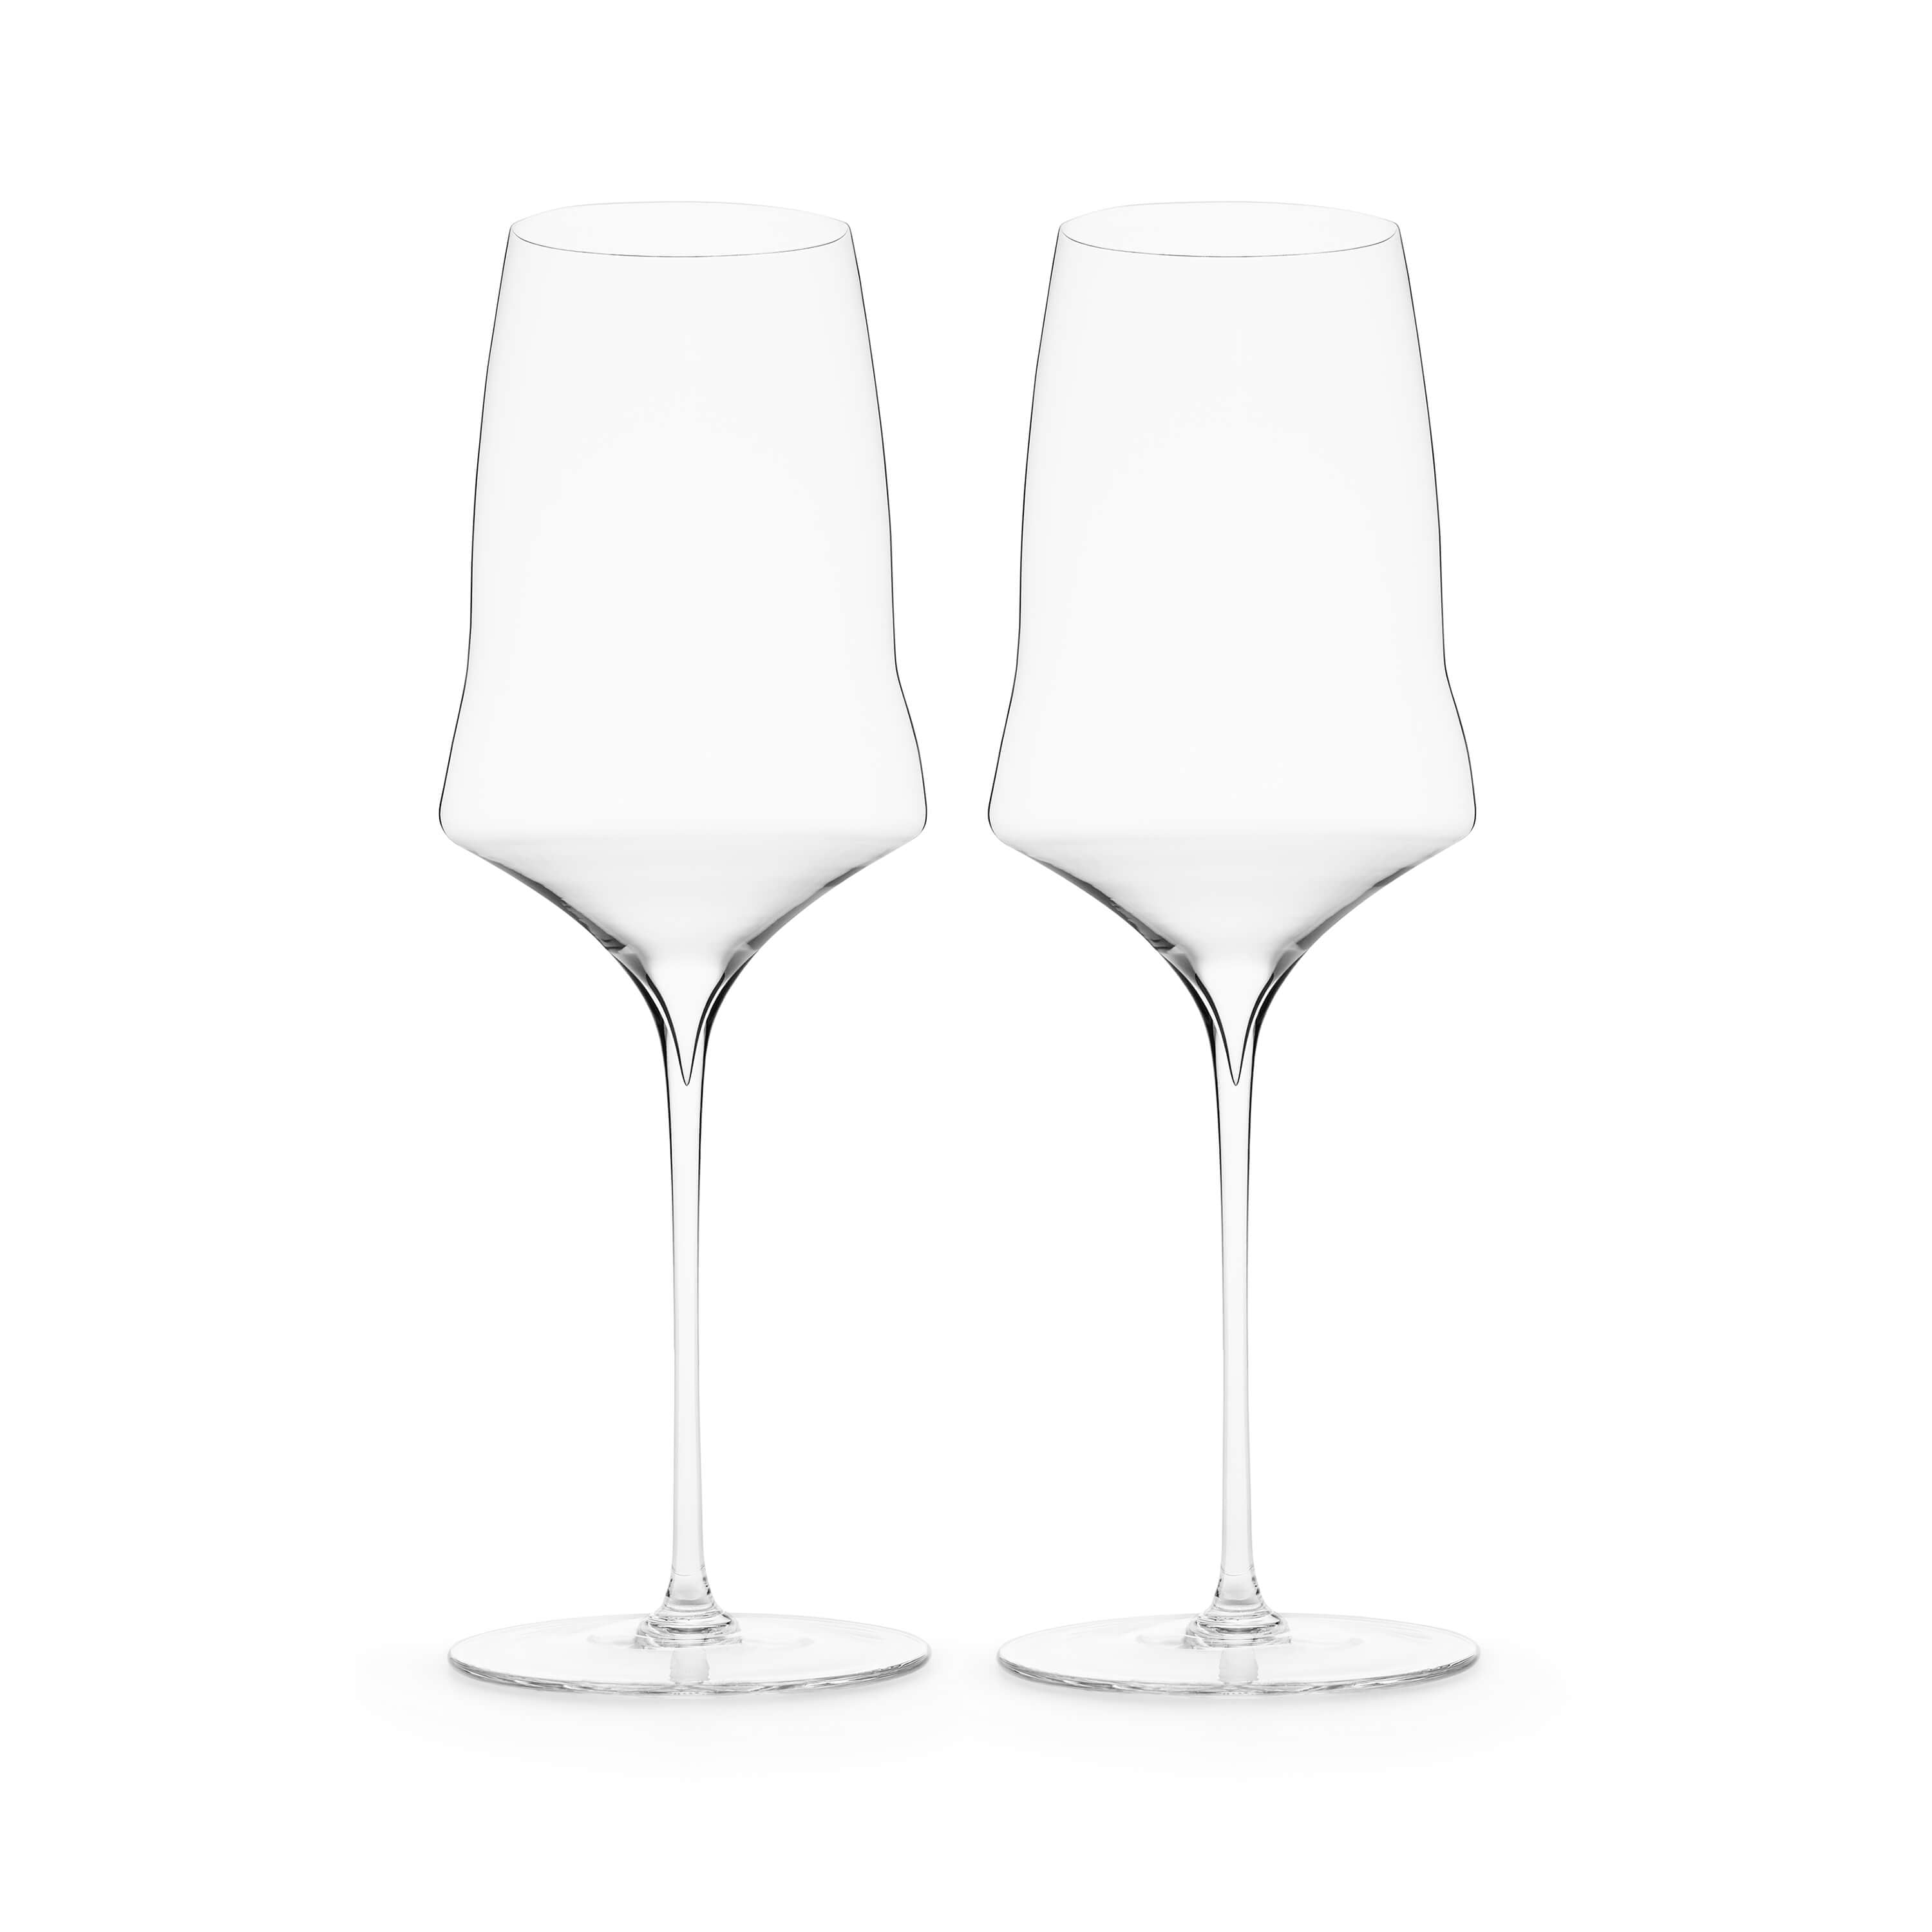 JOSEPHINE No 1 by Josephinenhütte – White wine glasses #Set_Set of 2